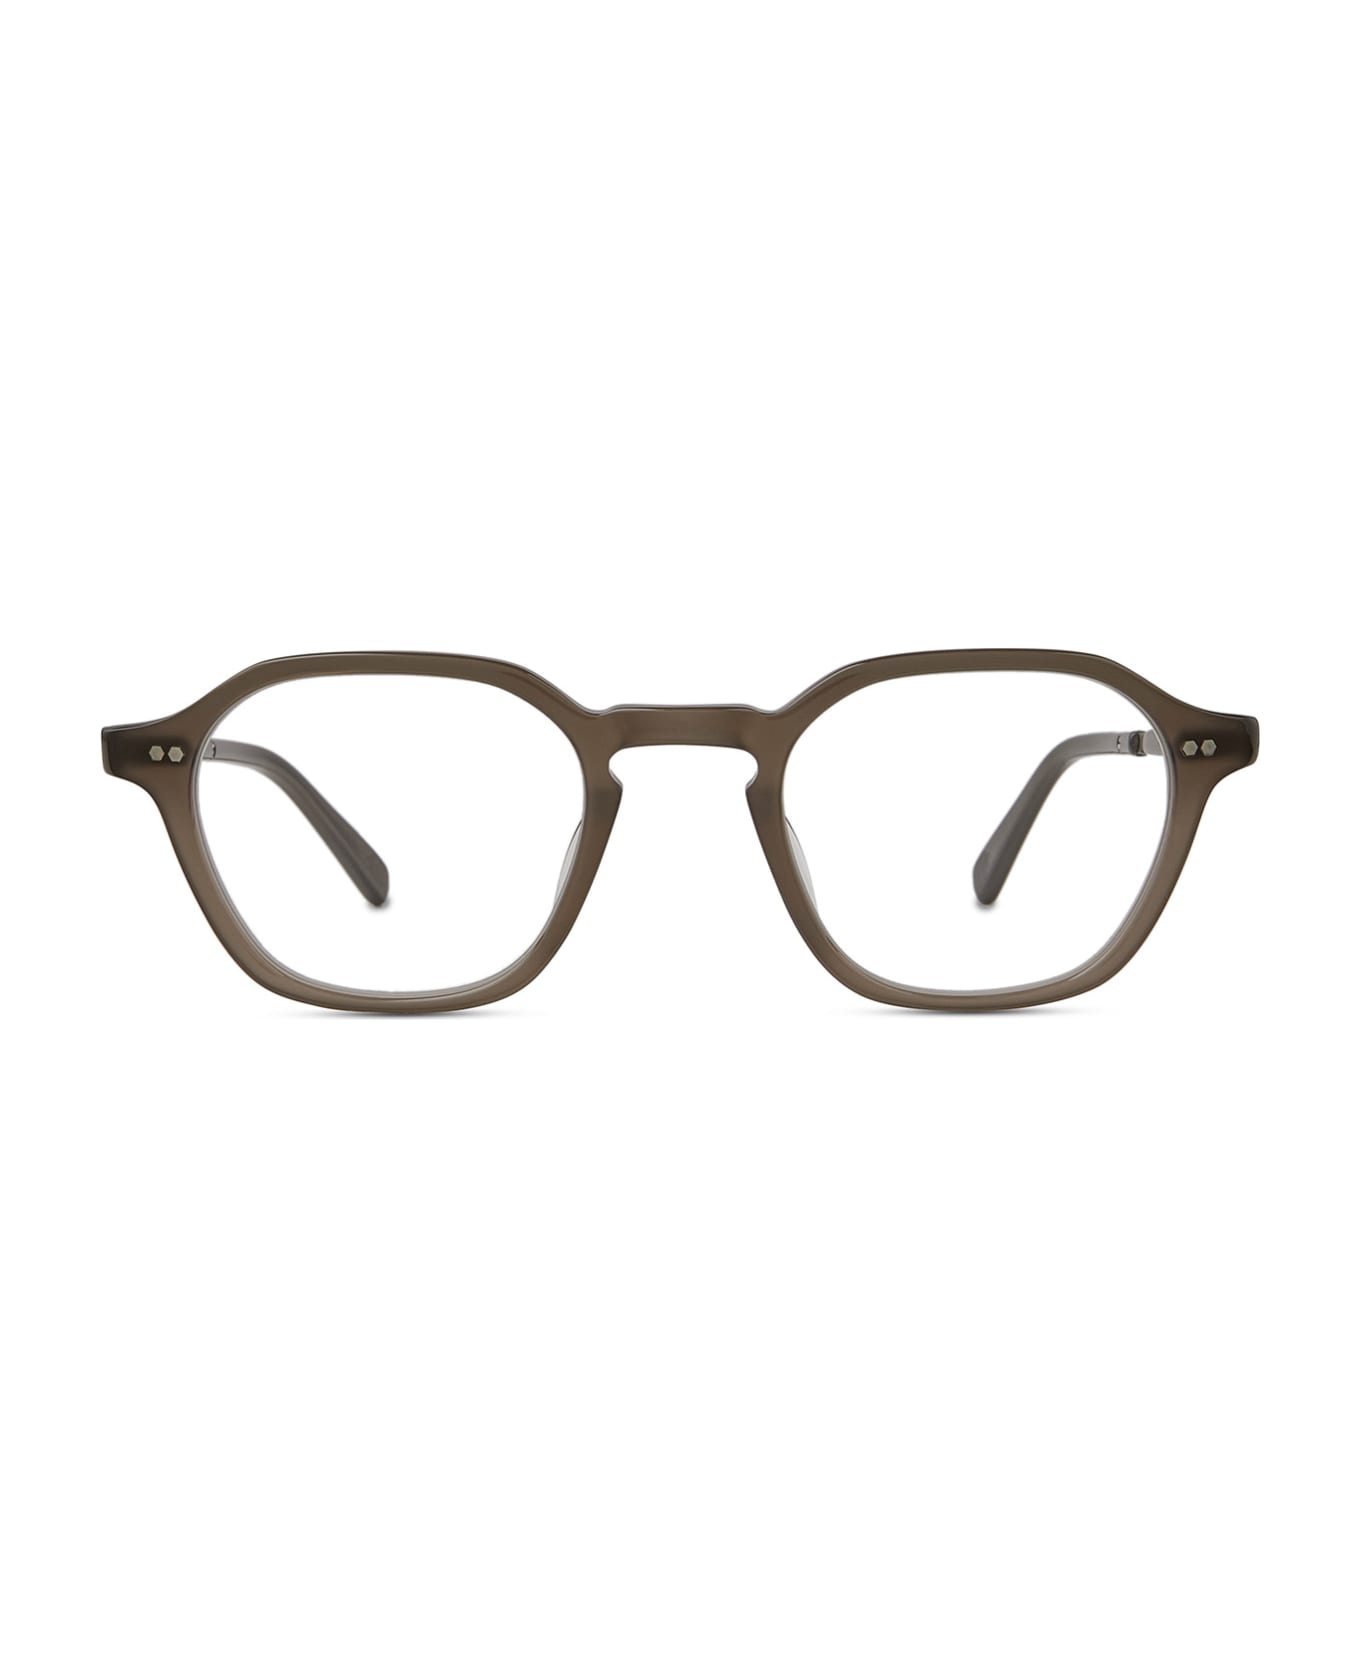 Mr. Leight Rell Ii C Truffle-platinum Glasses - Truffle-Platinum アイウェア